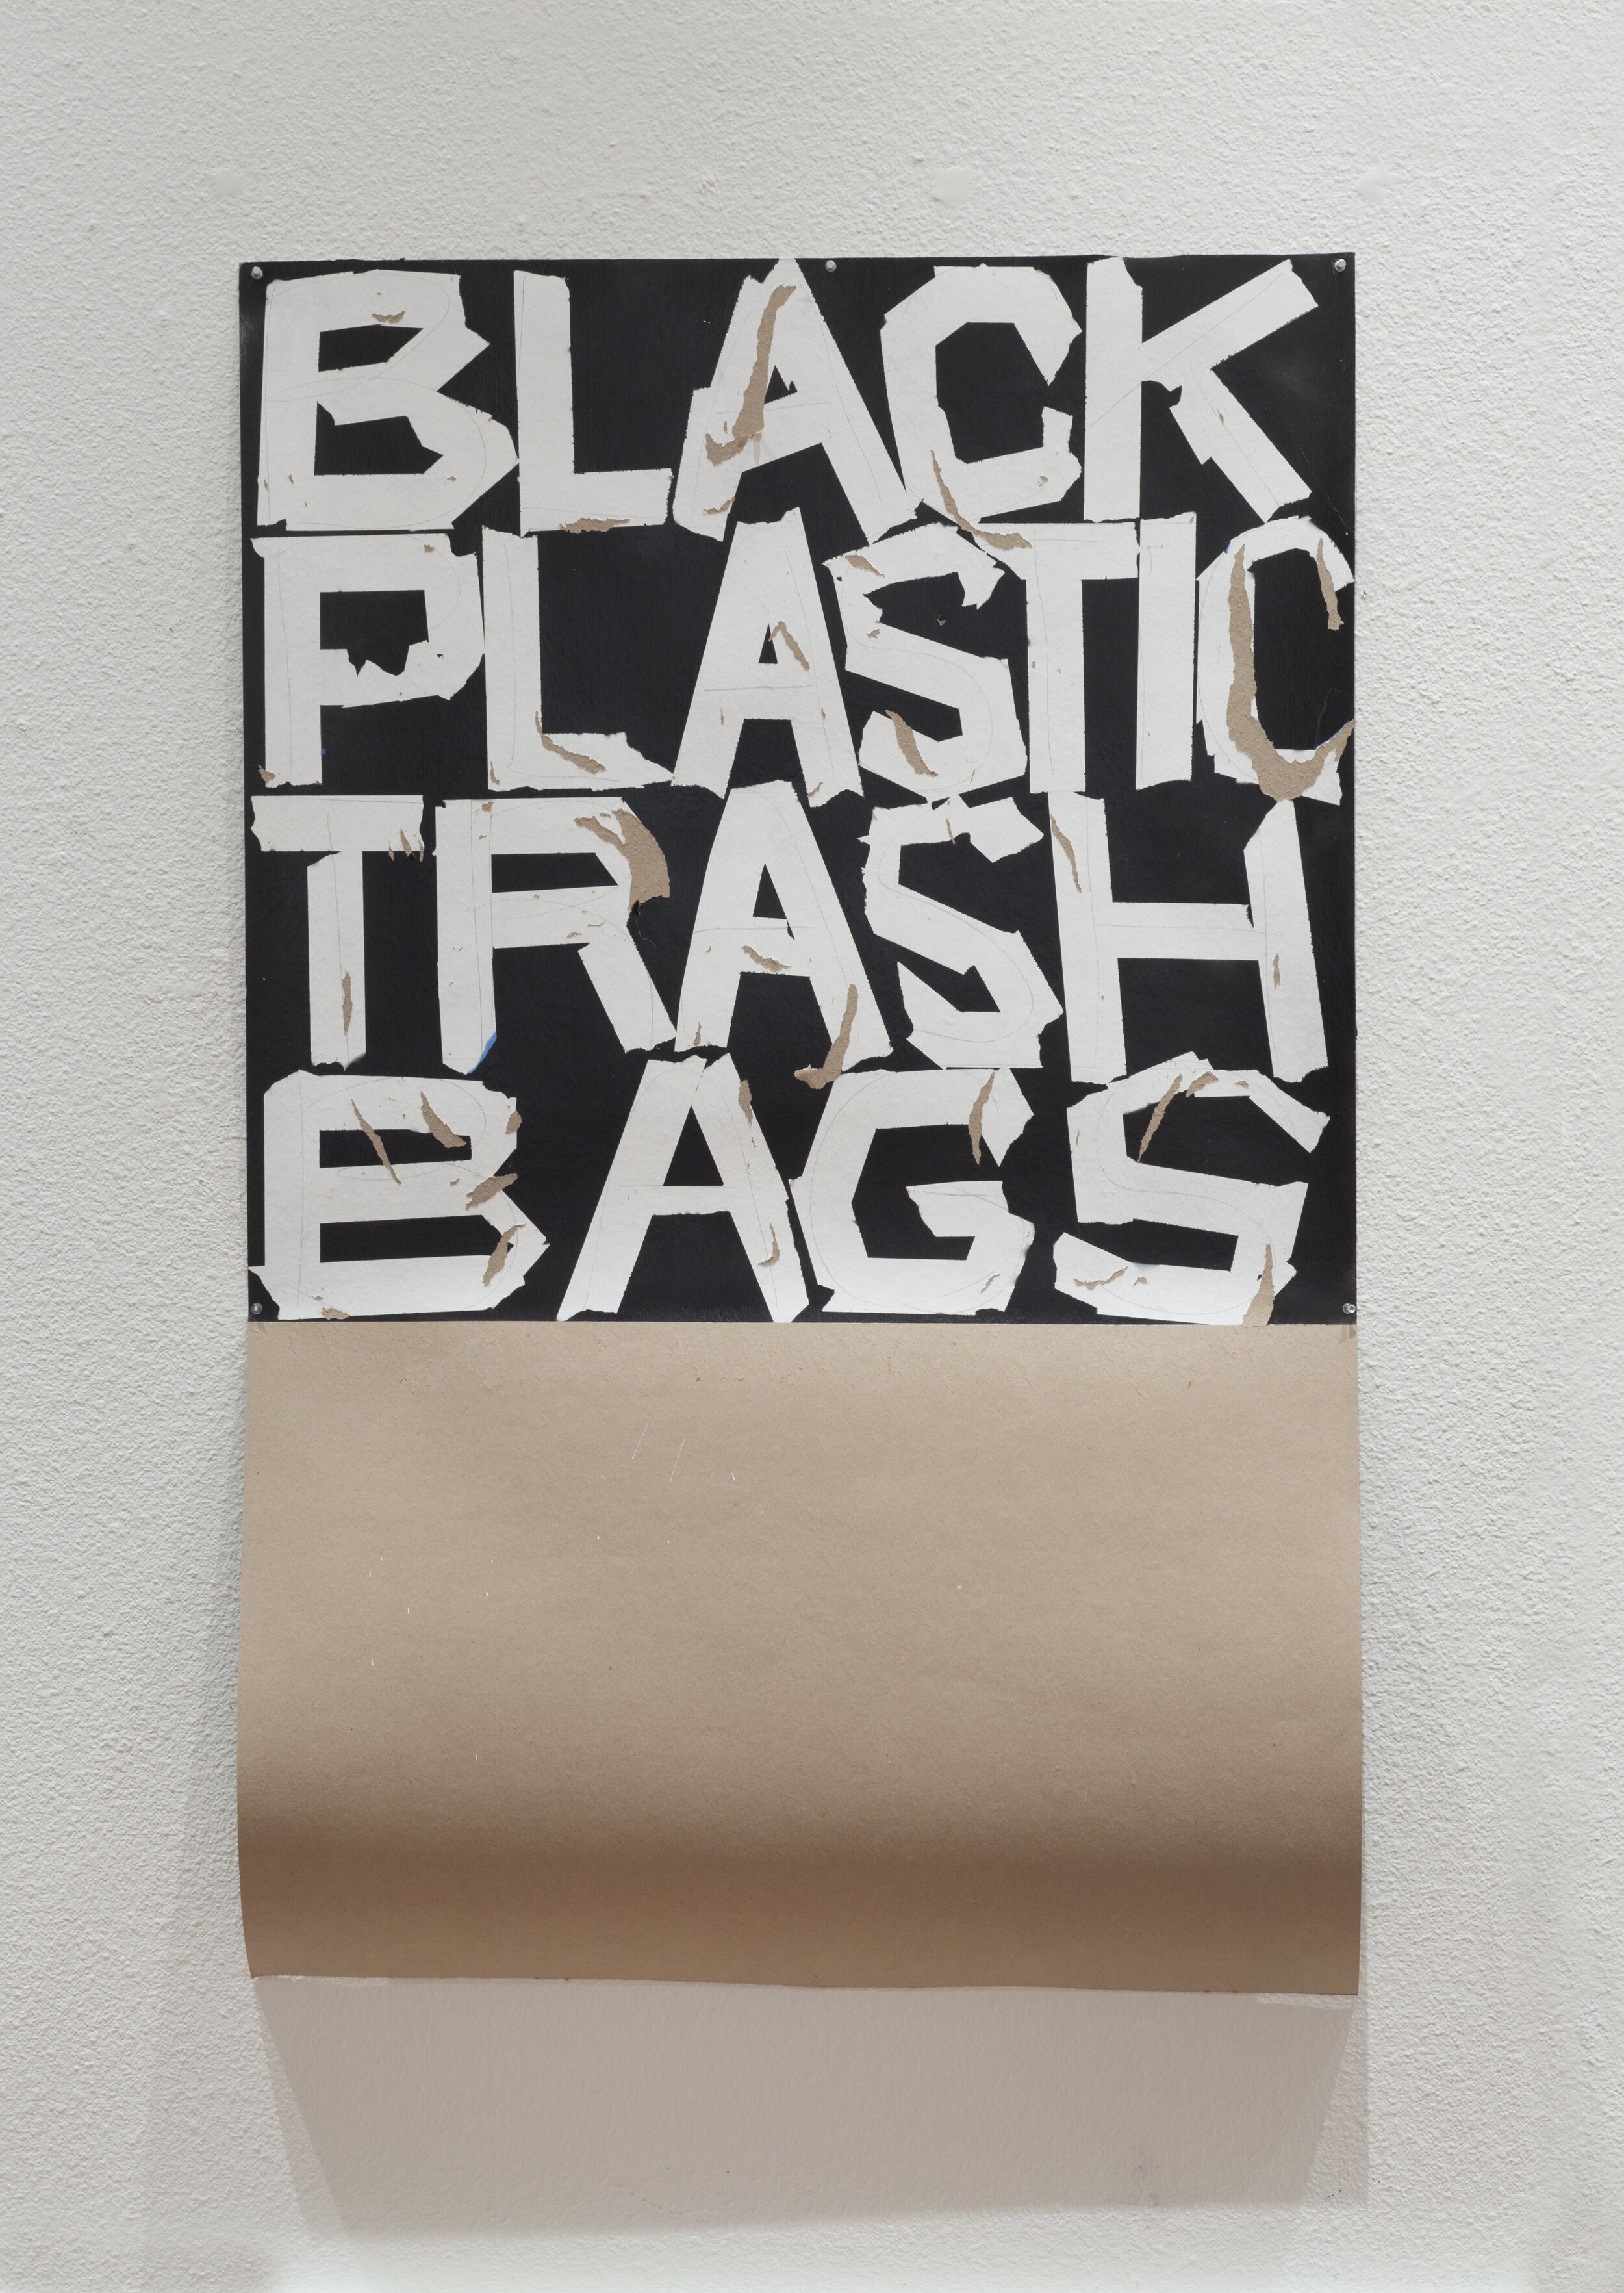 Graffiti (Black Plastic Trash Bags)